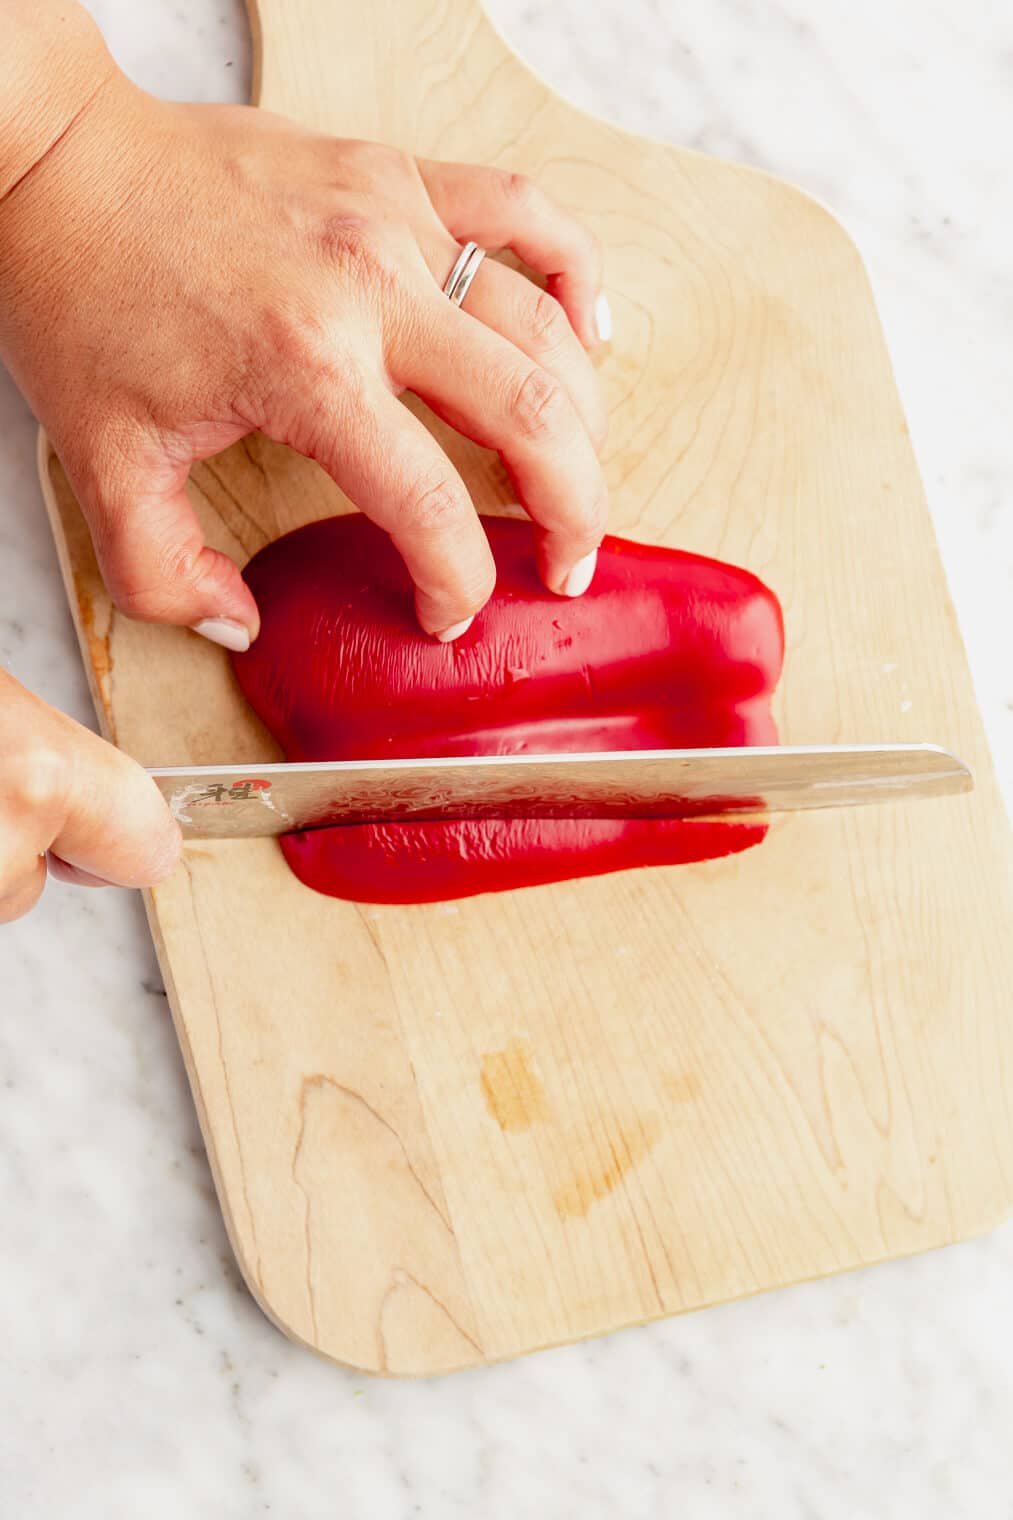 Hand using butcher knife to slice bell pepper.